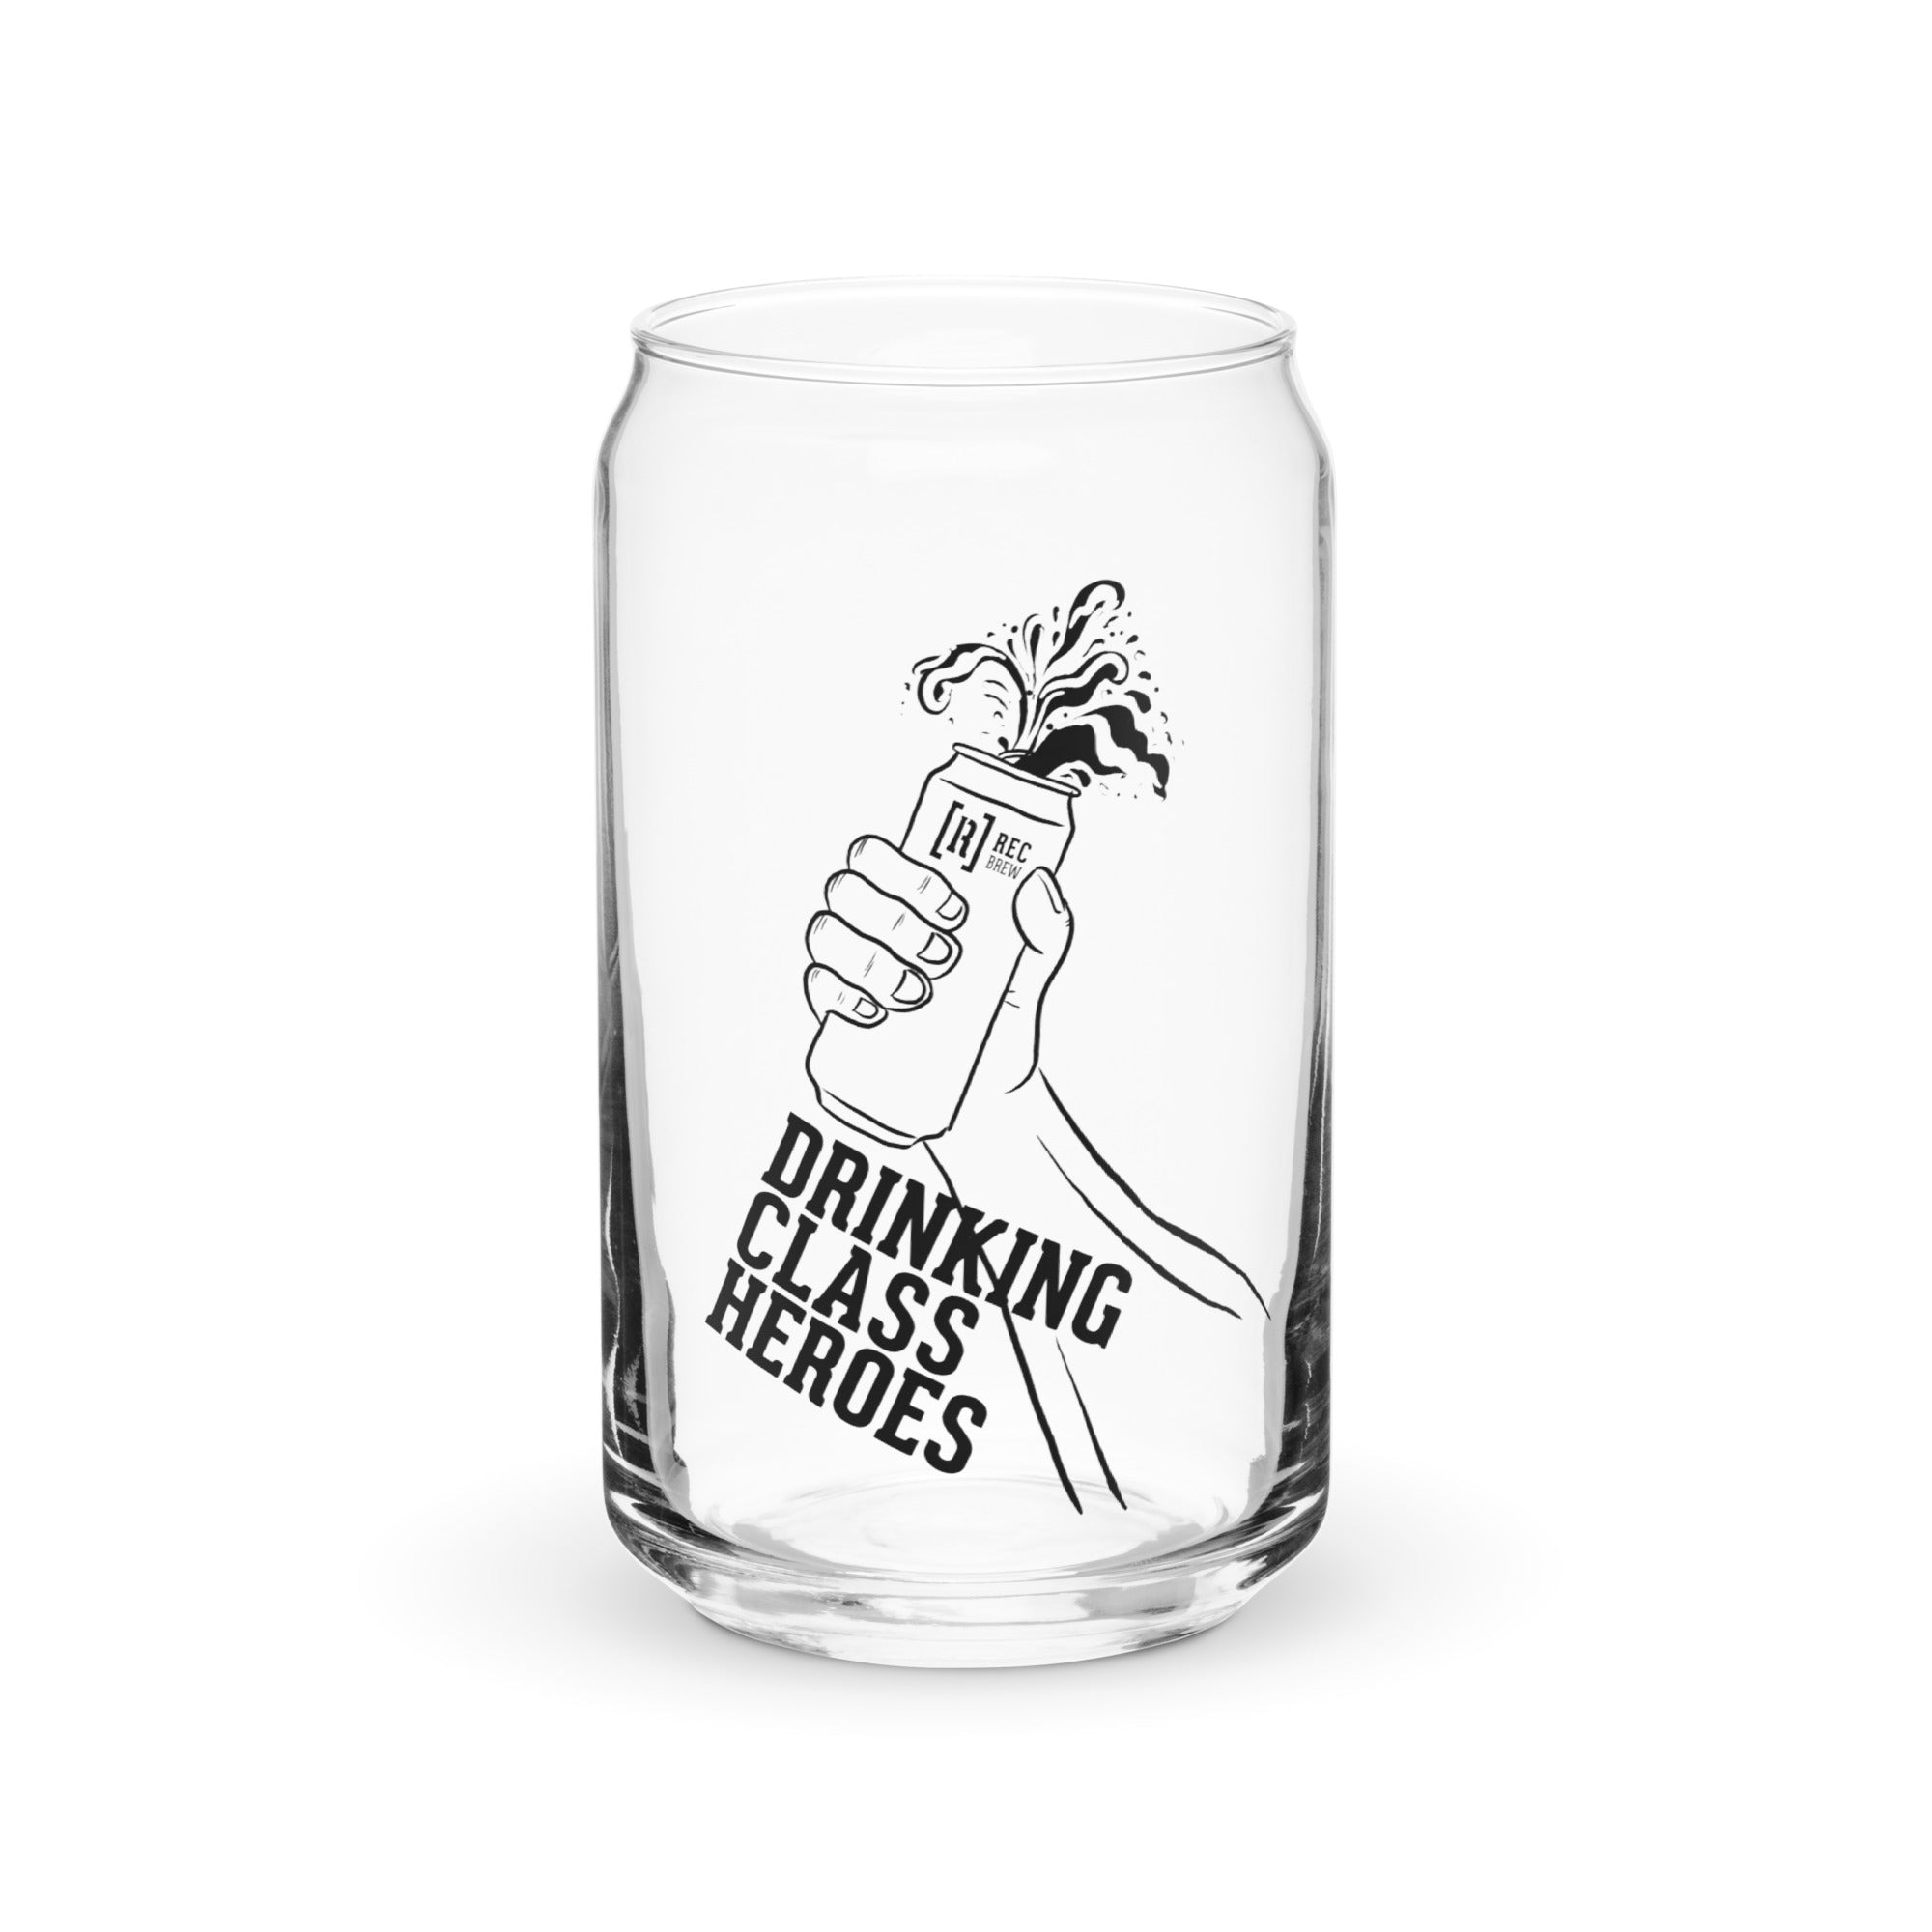 Vaso lata Drinking Class Heroes - Rec Brew